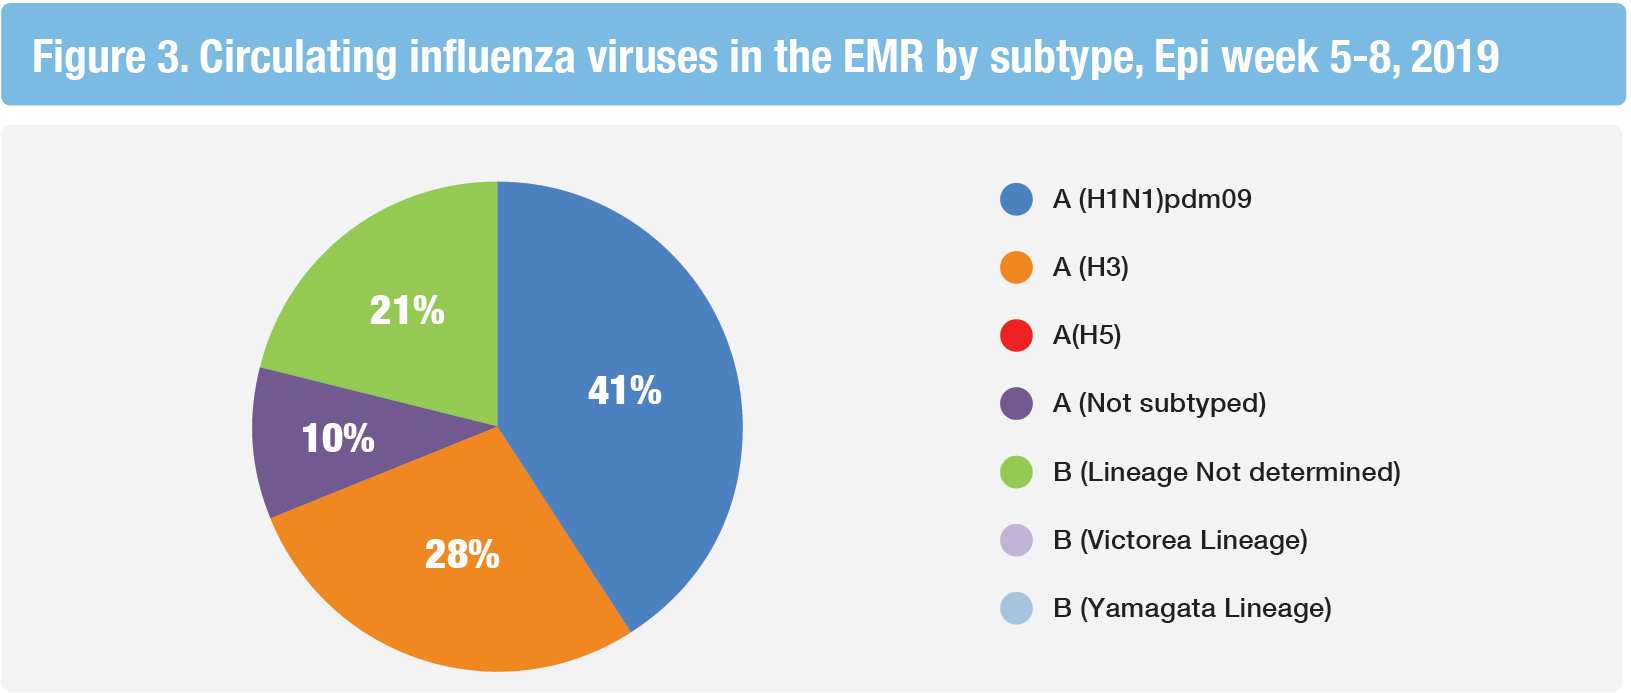 Circulating influenza viruses by subtype